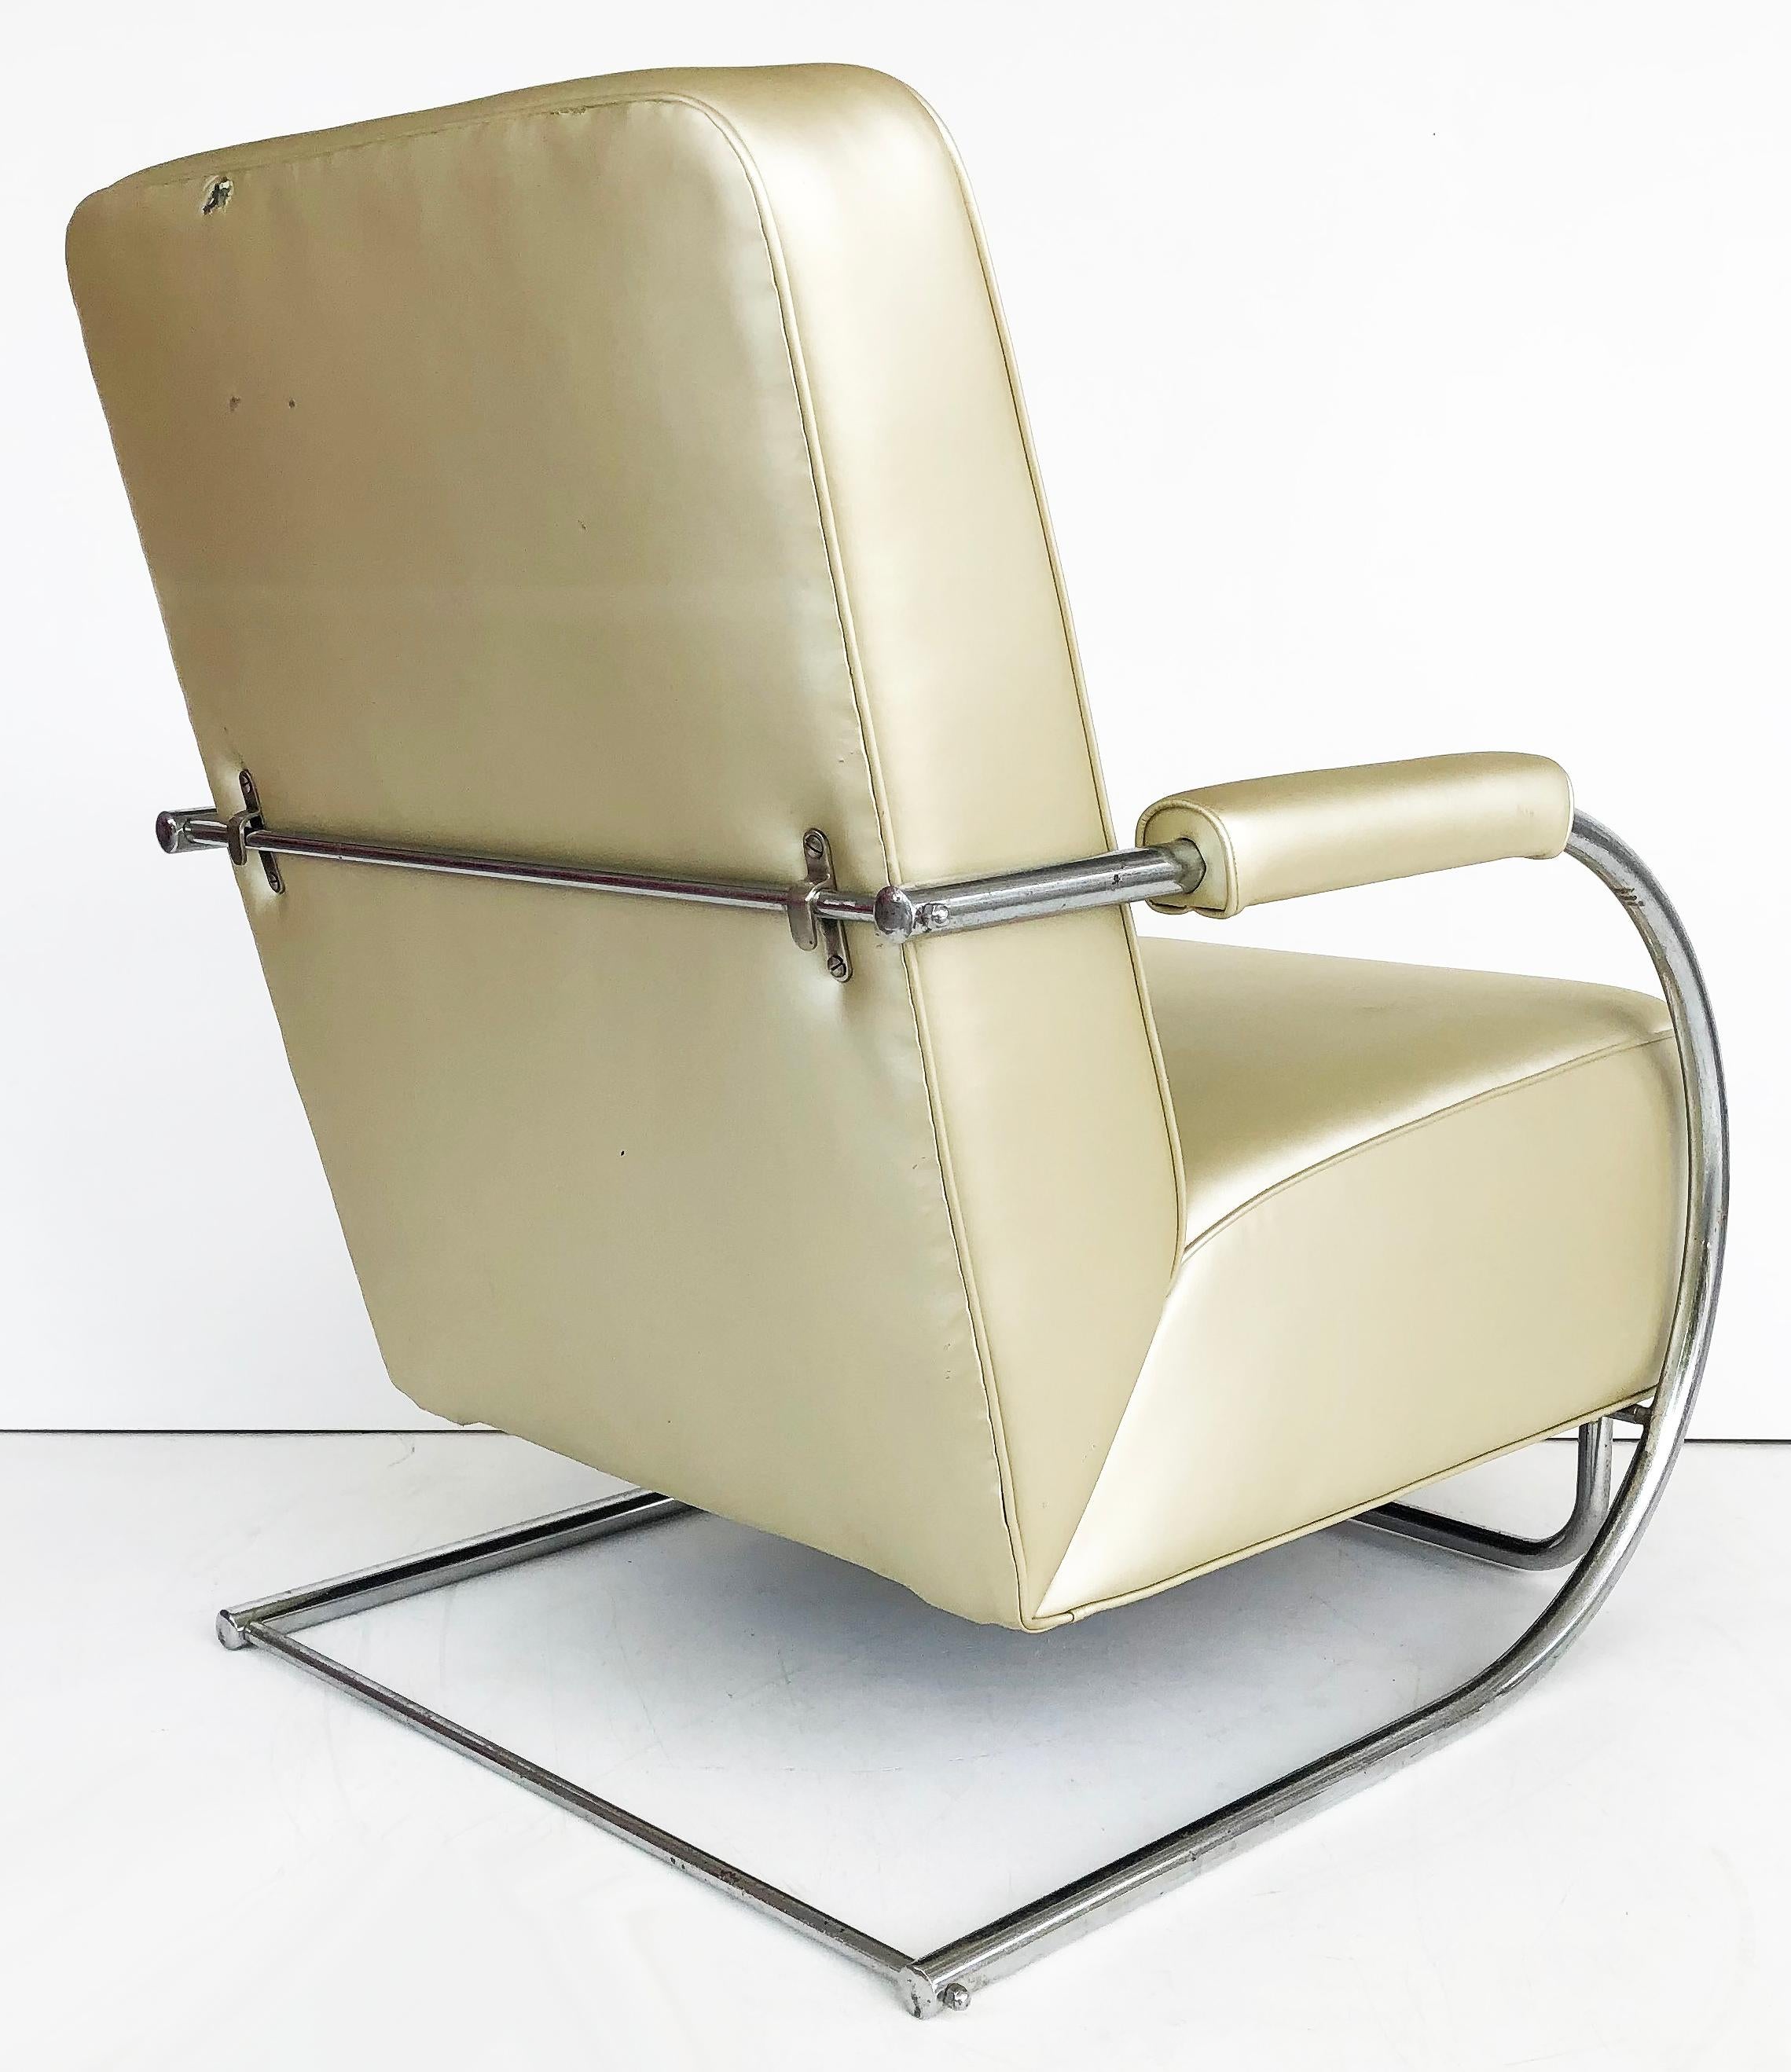 American Art Deco Streamline Moderne Chairs by Kem Weber, Attributed 